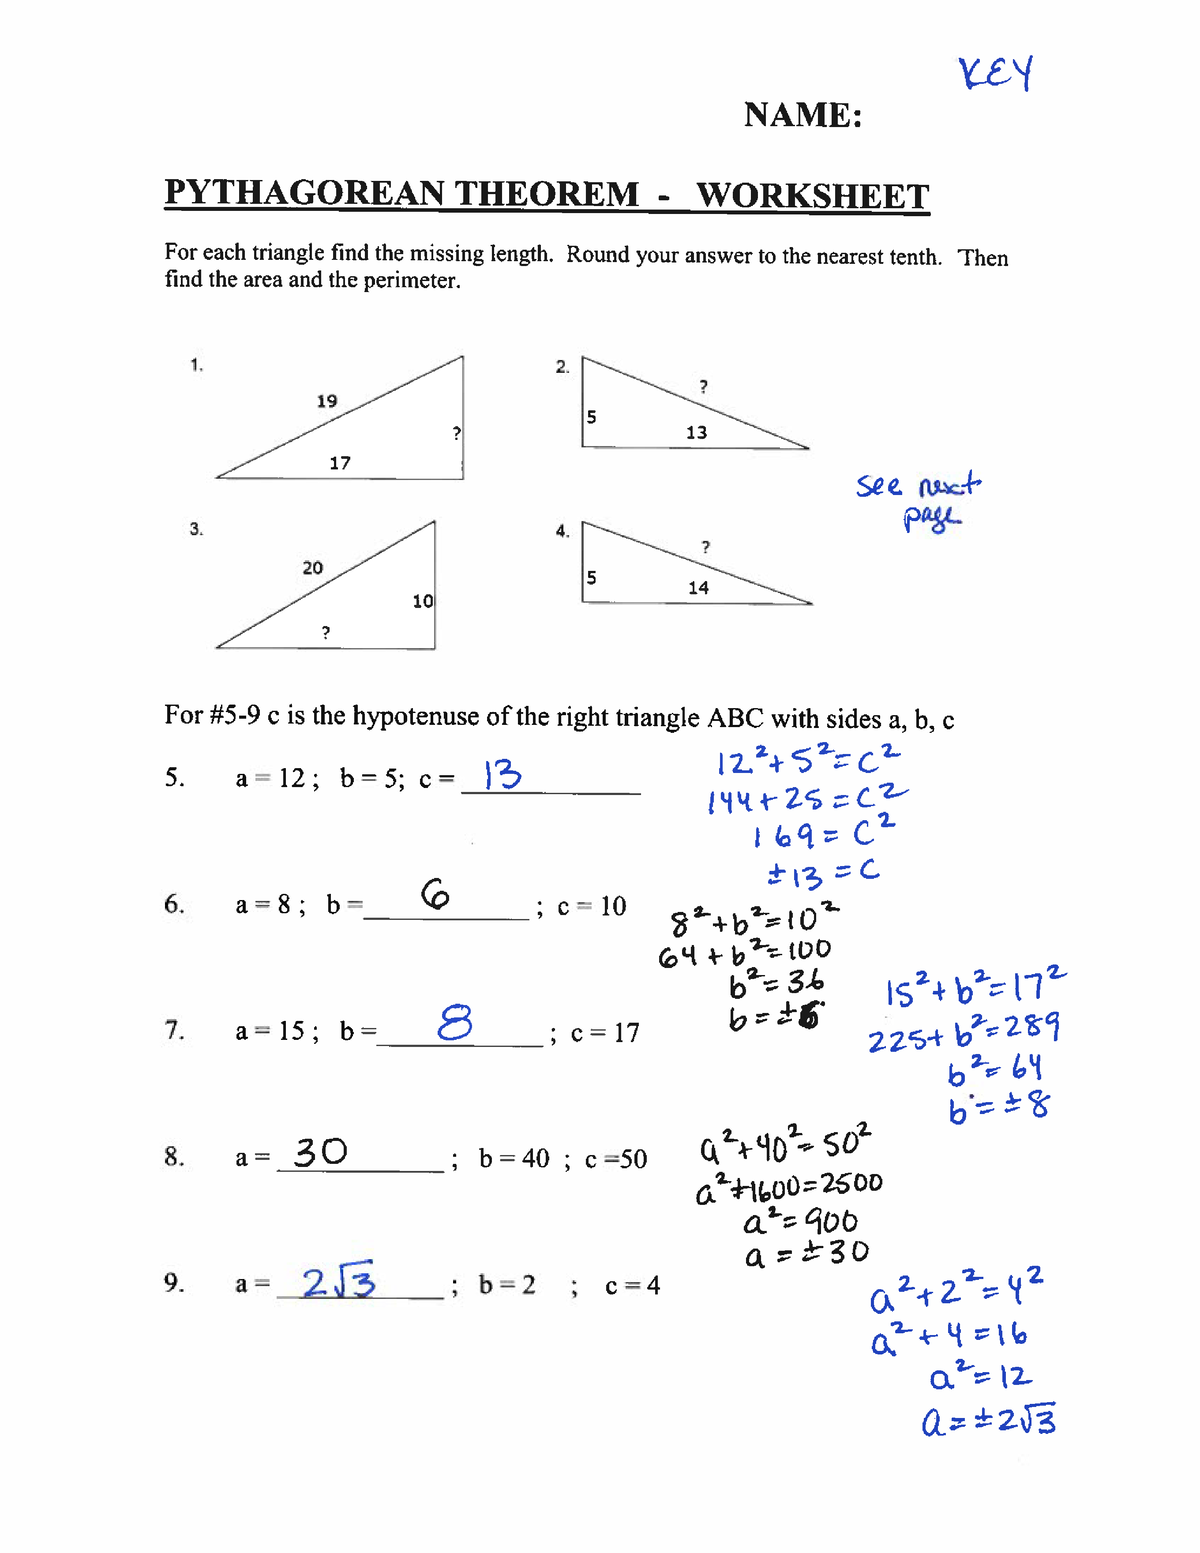 pythagorean-theorem-worksheet-answer-key-studocu